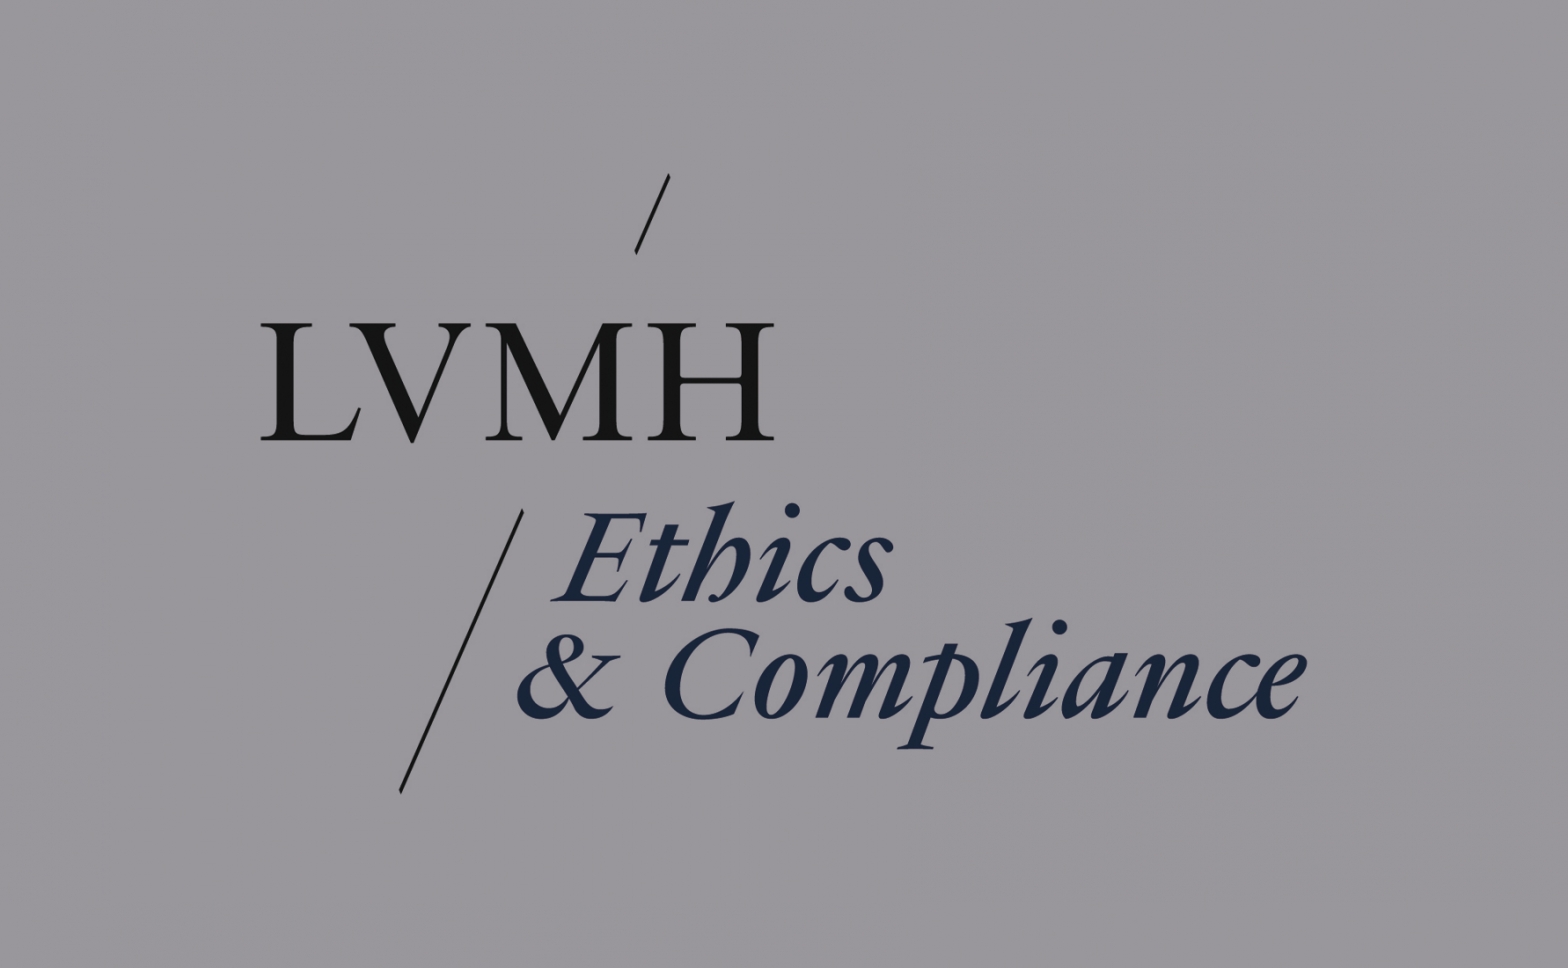 LVMH Luxury Ventures - Org Chart, Teams, Culture & Jobs